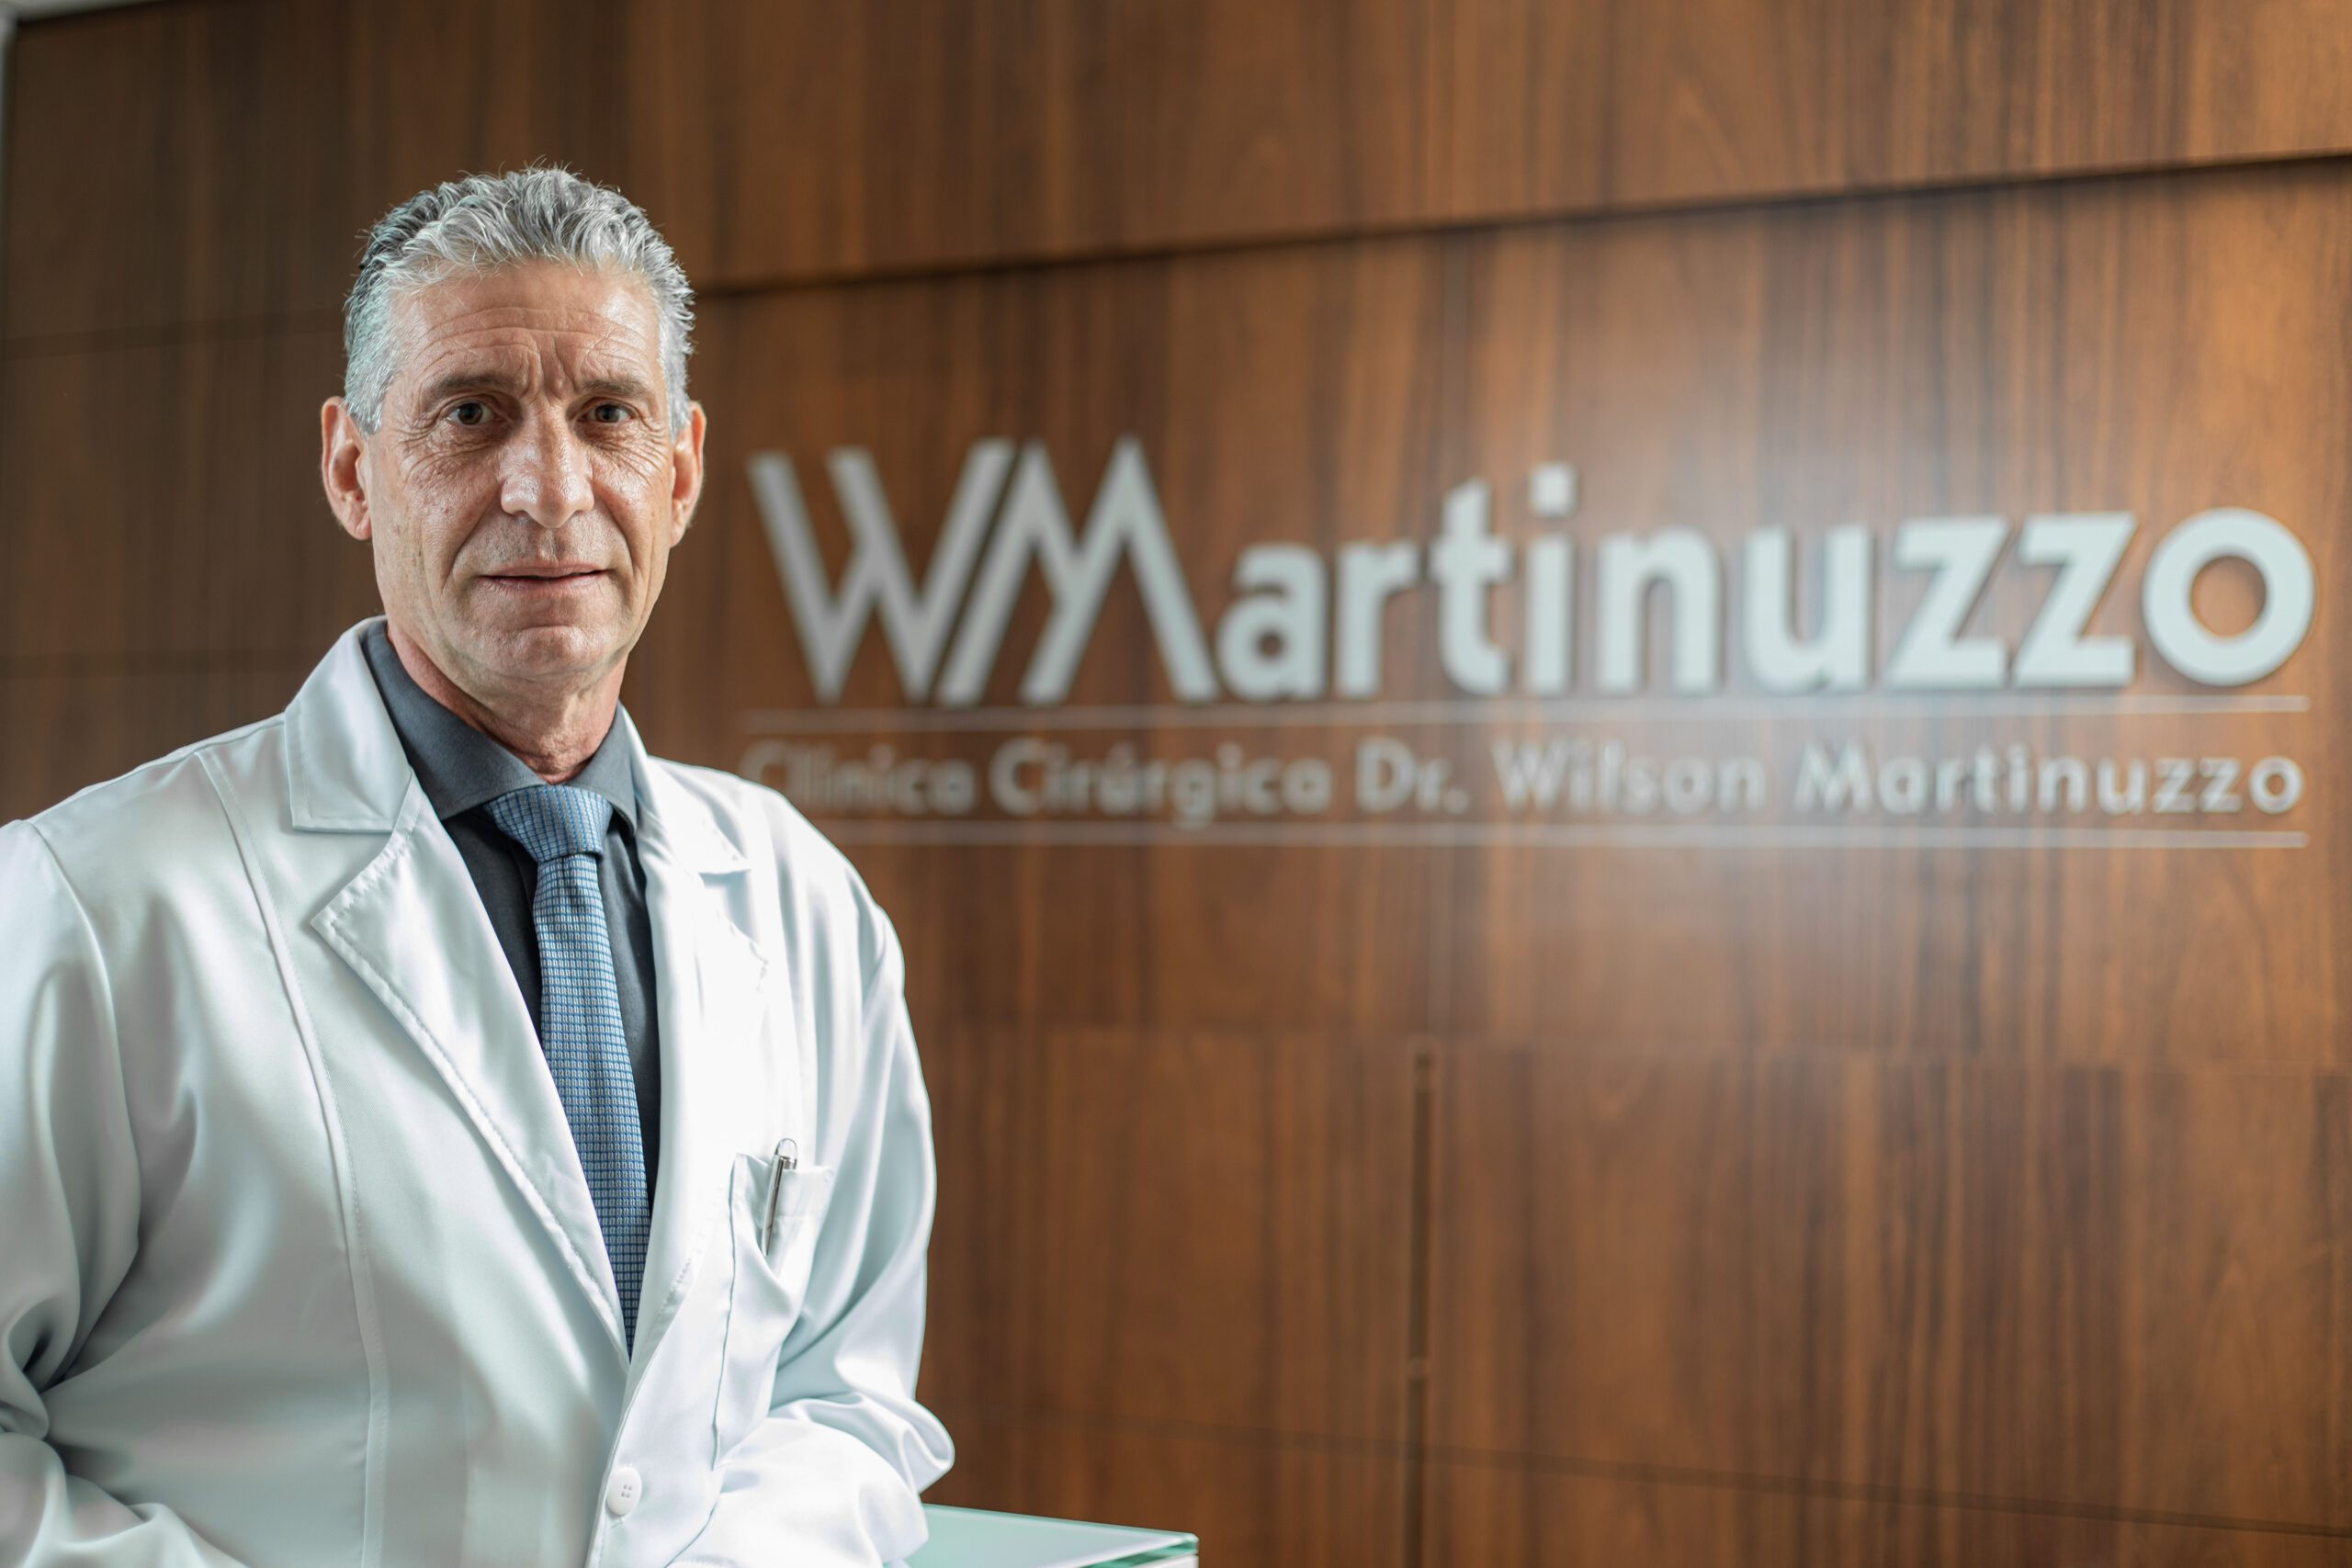 Hérnia inguinal - Dr. Wilson Martinuzzo